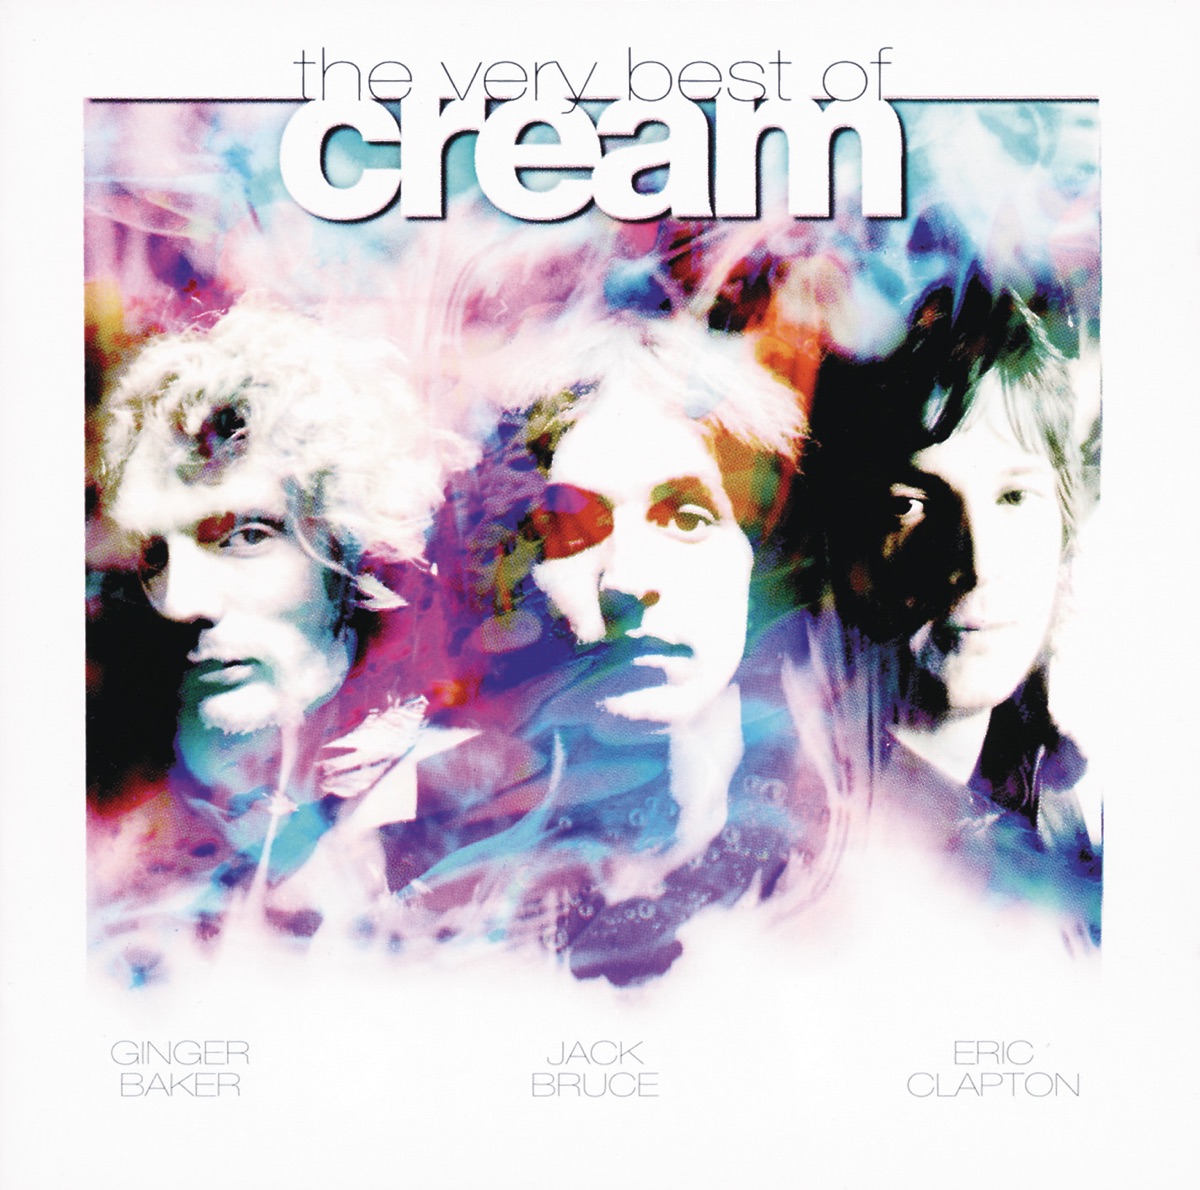 Disraeli Gears - Album by Cream - Apple Music